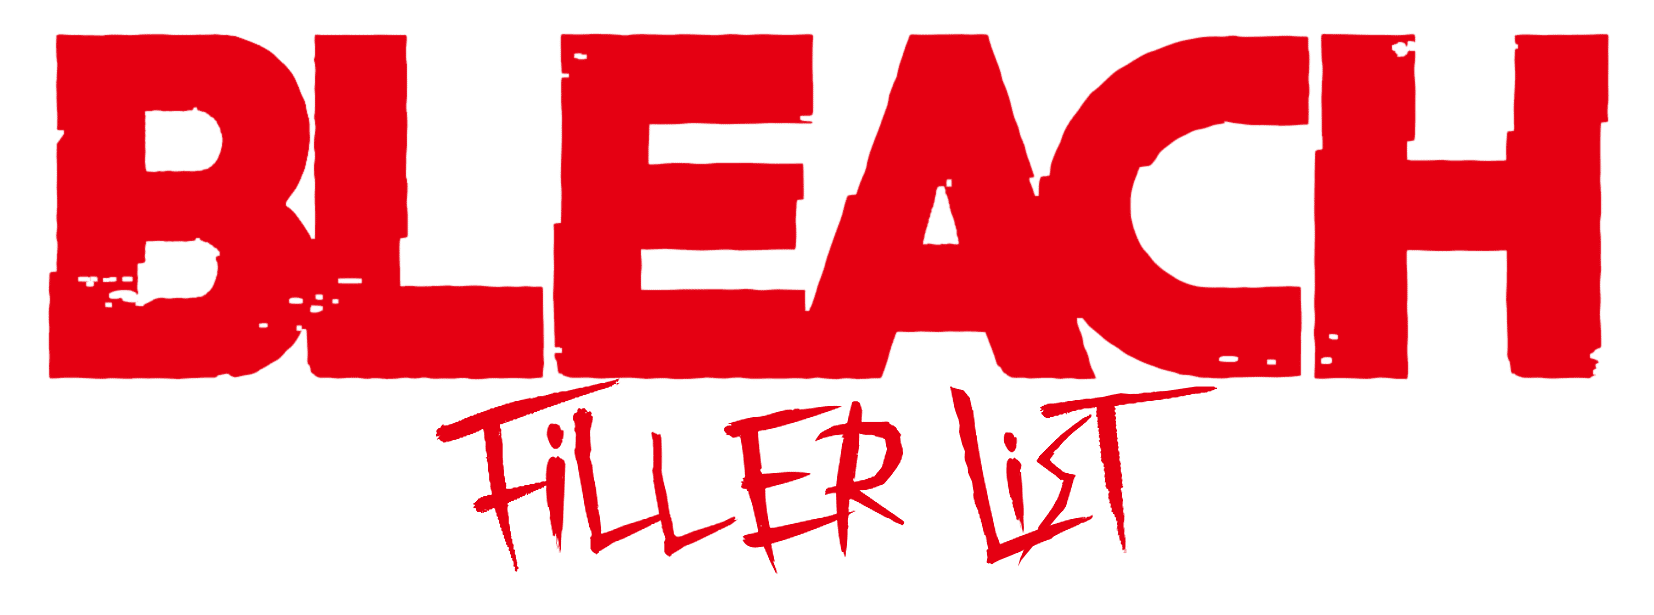 Bleach Filler list - English Podcast - Download and Listen Free on JioSaavn